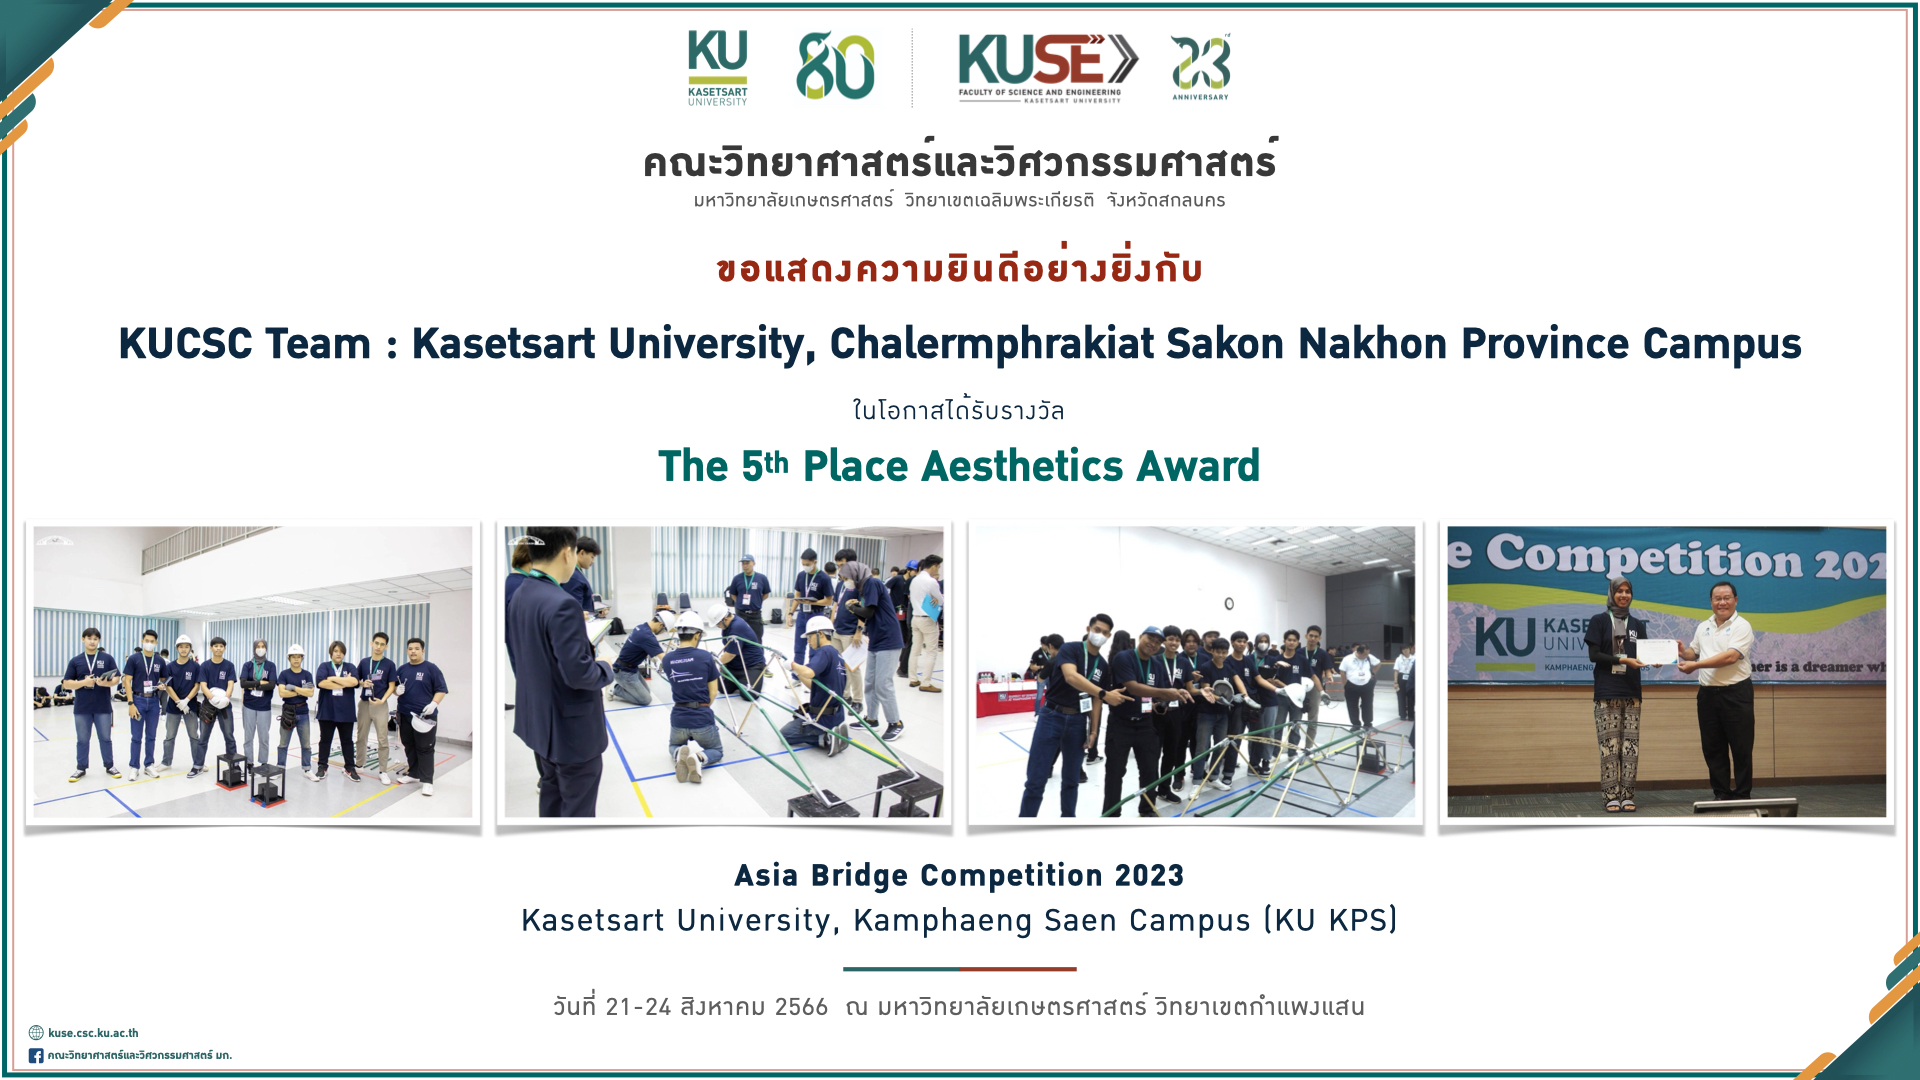 KUCSC Team : The 5th Place Aesthetics Award